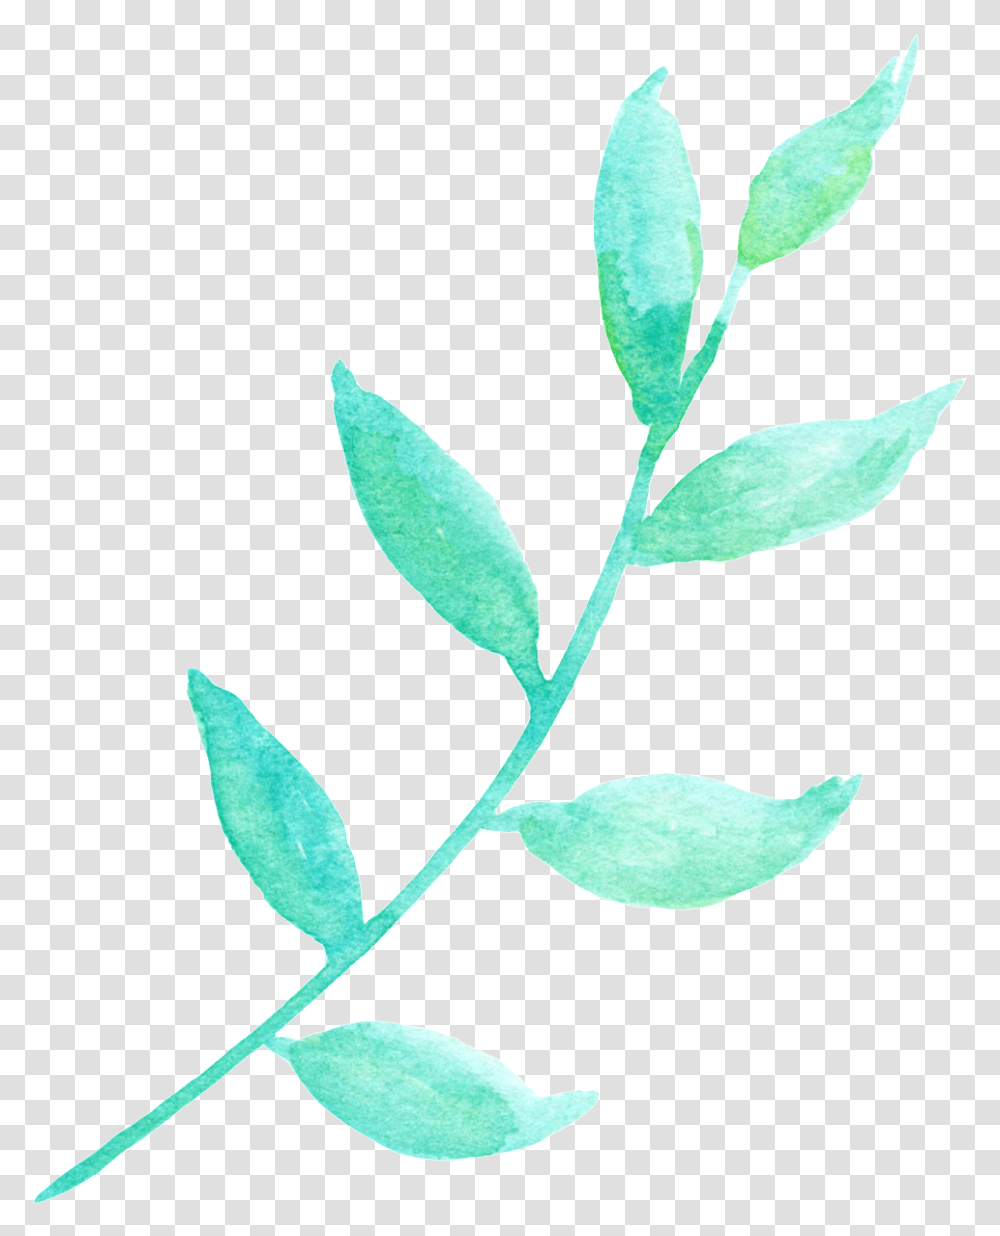 La Luz Del Sol Y La Hoja Verde Cartoon Transparente Flower, Leaf, Plant, Green, Blossom Transparent Png